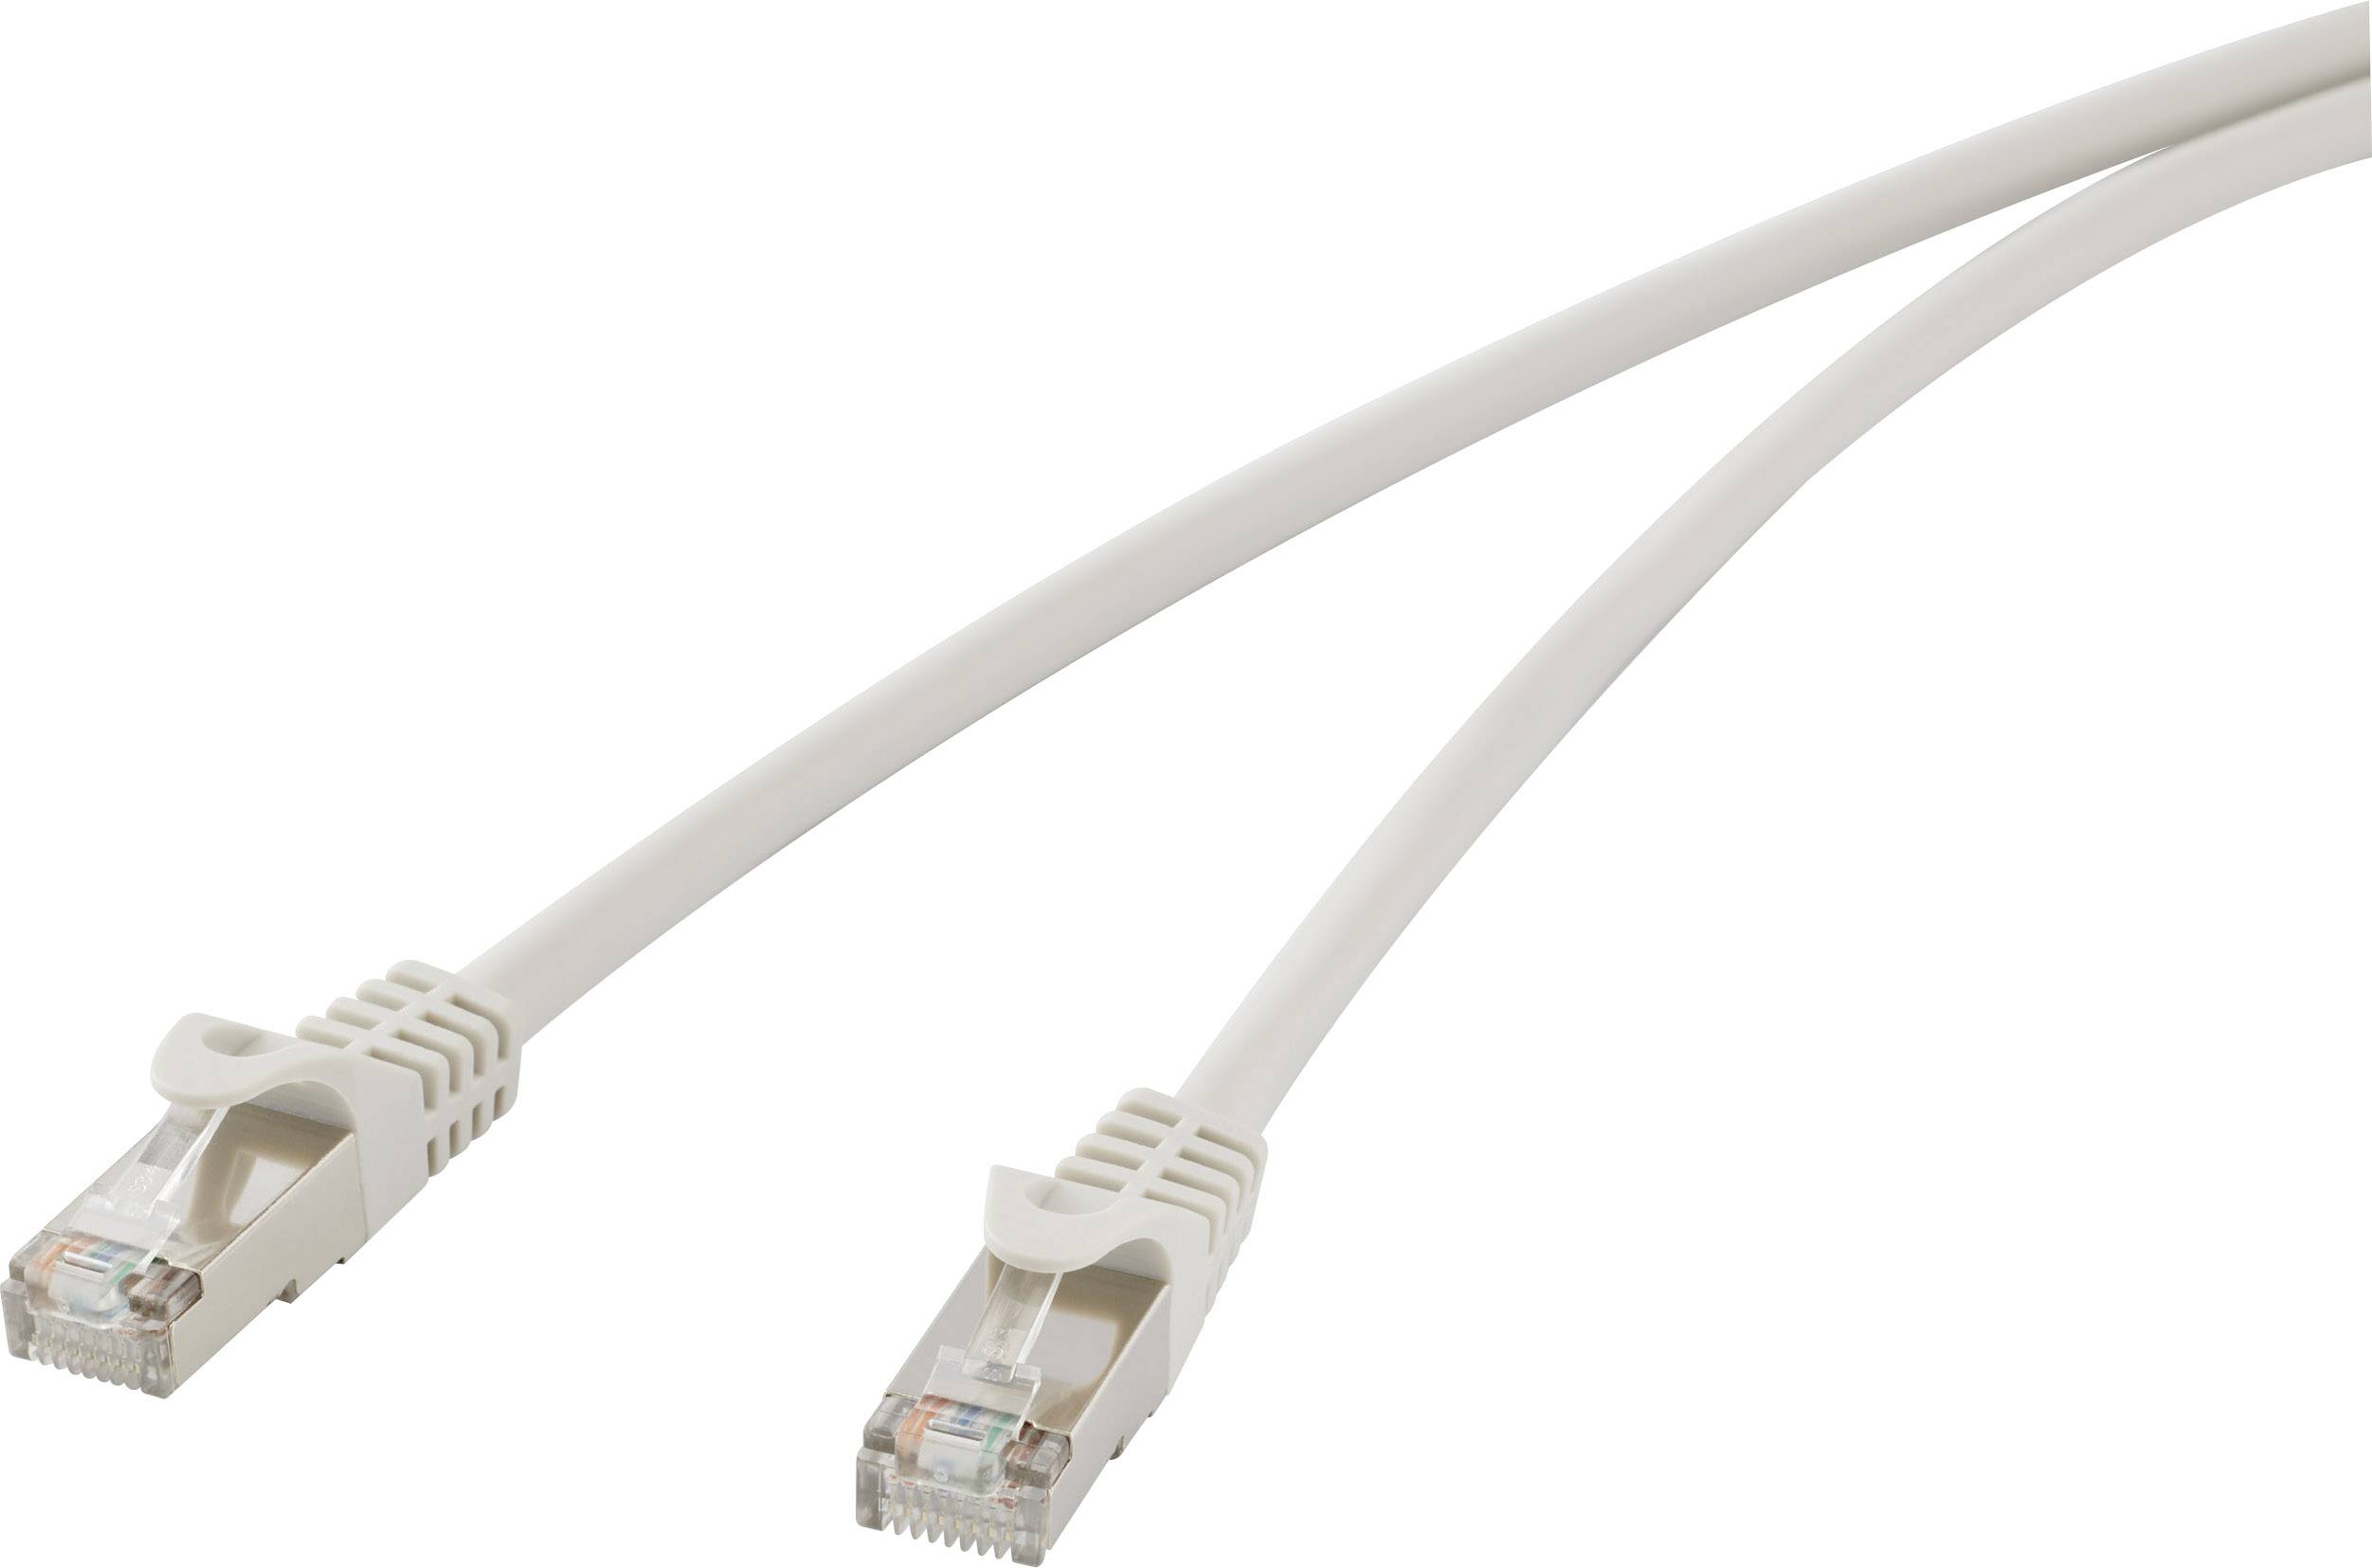 Hama 0.5m CAT5e UTP Network Cable Grey 